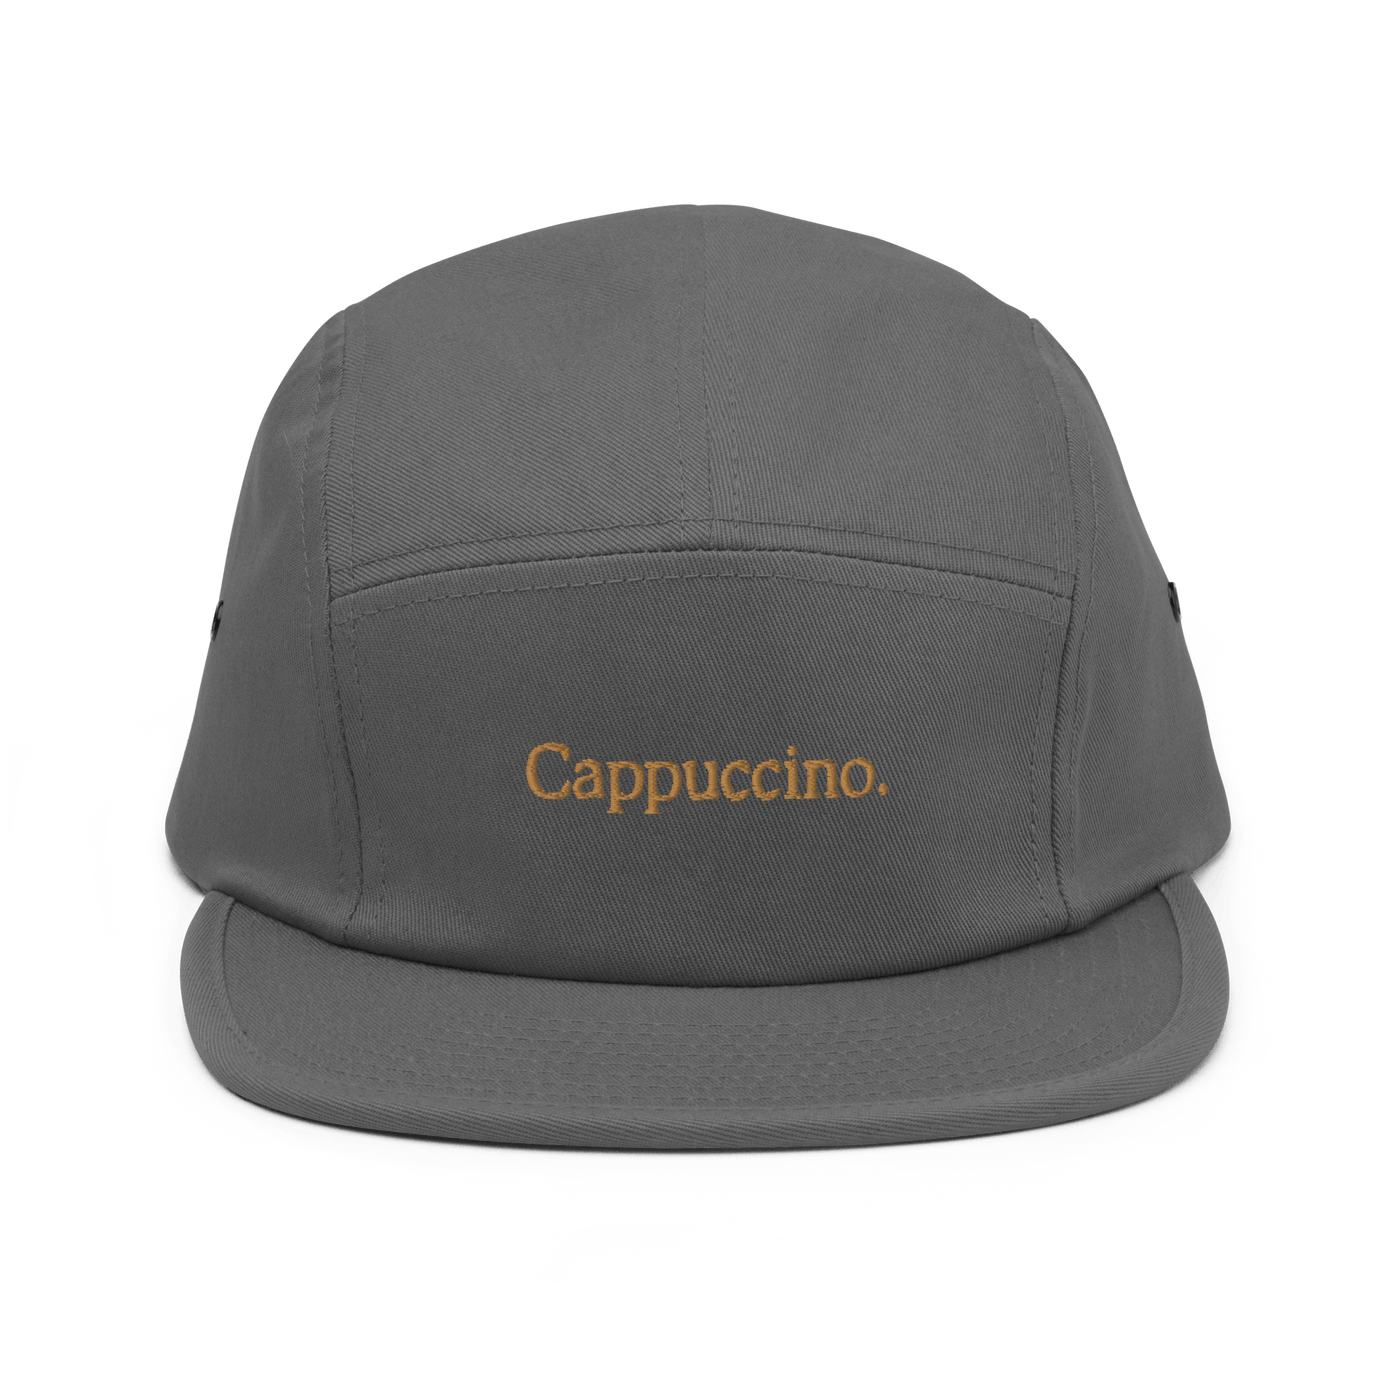 Cappuccino Five Panel Cap - Grey - - Just Another Cap Store